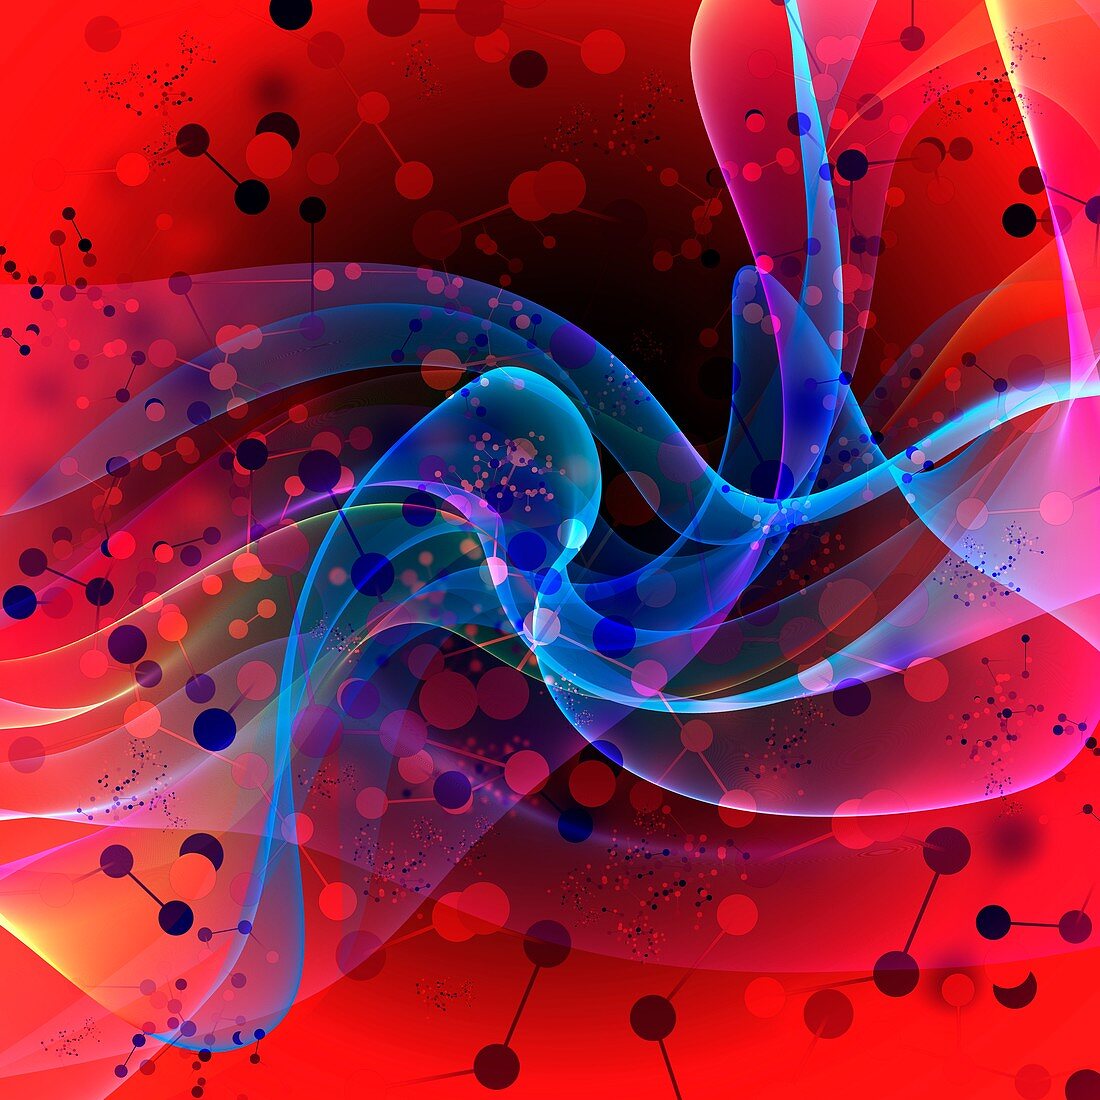 Blue swirls against red, illustration